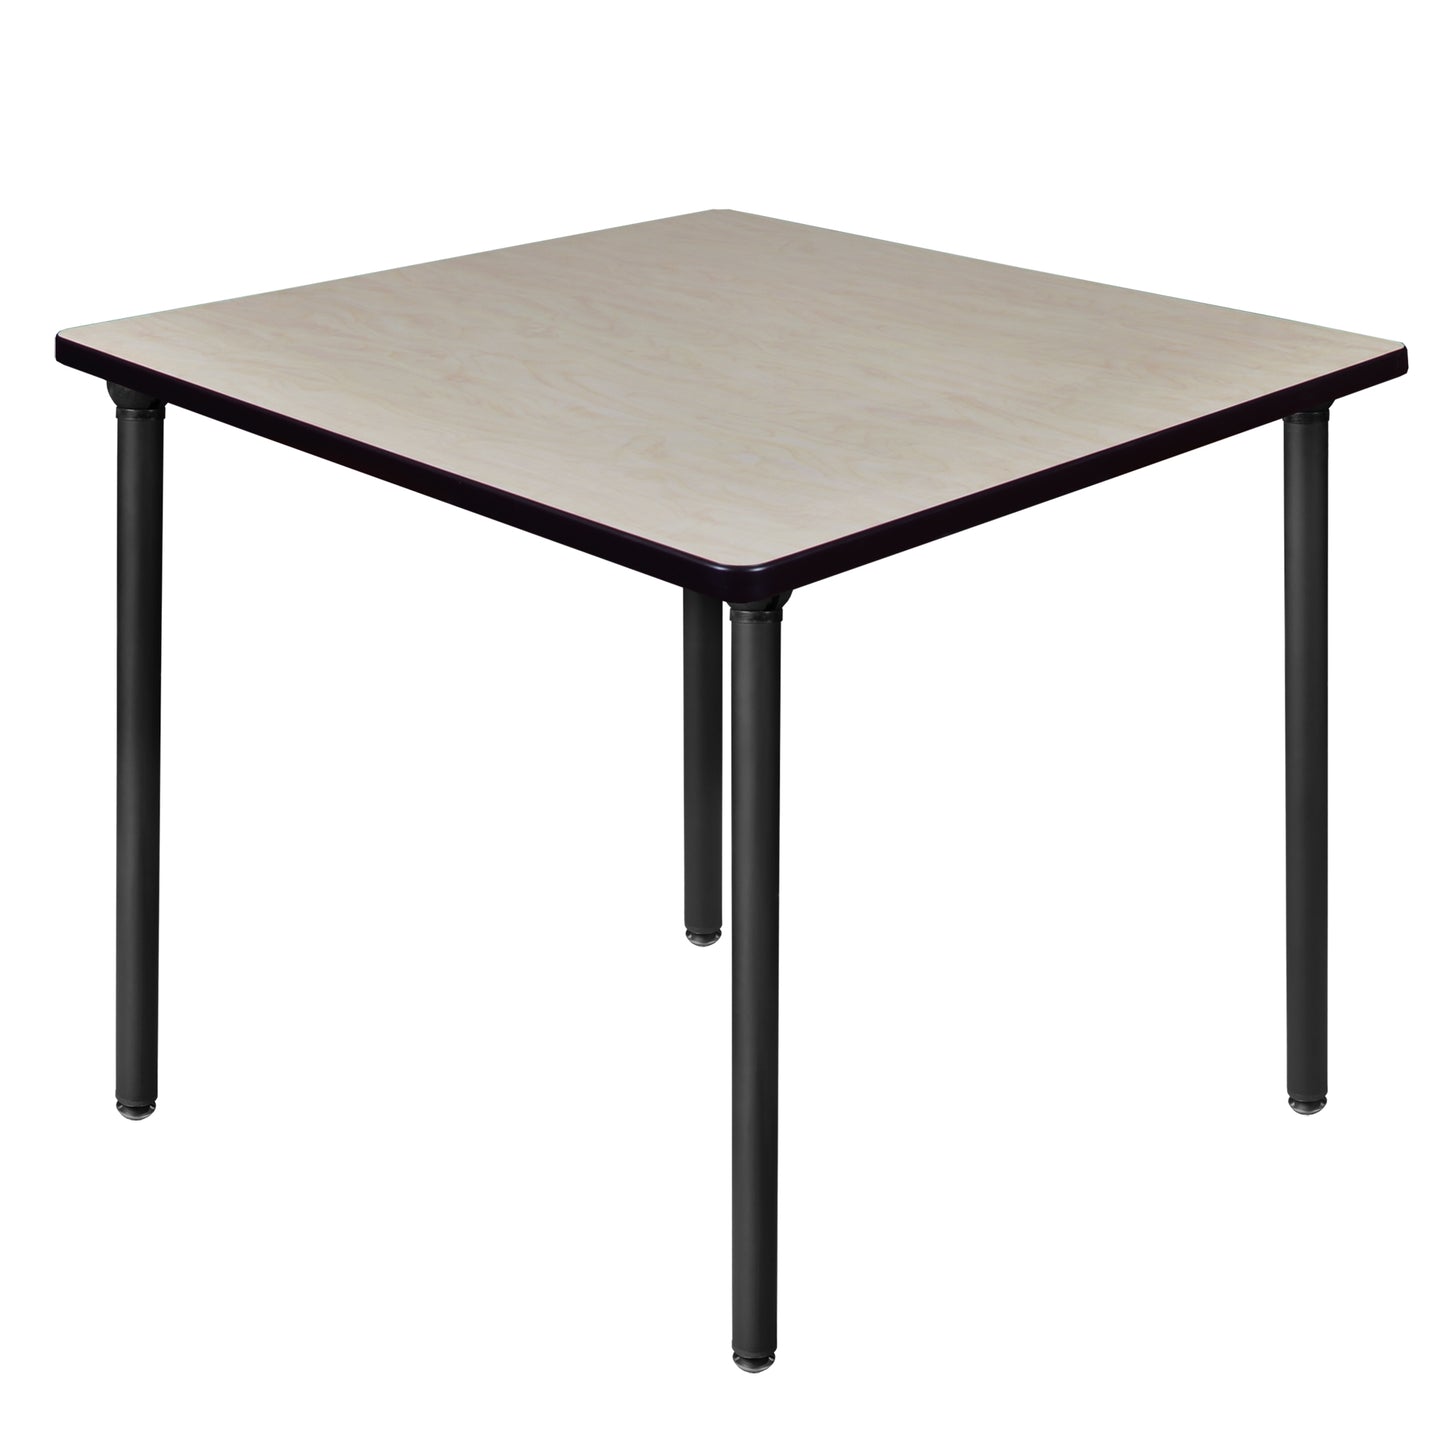 Regency Kee 36 in. Medium Square Breakroom Table, Black Folding Legs